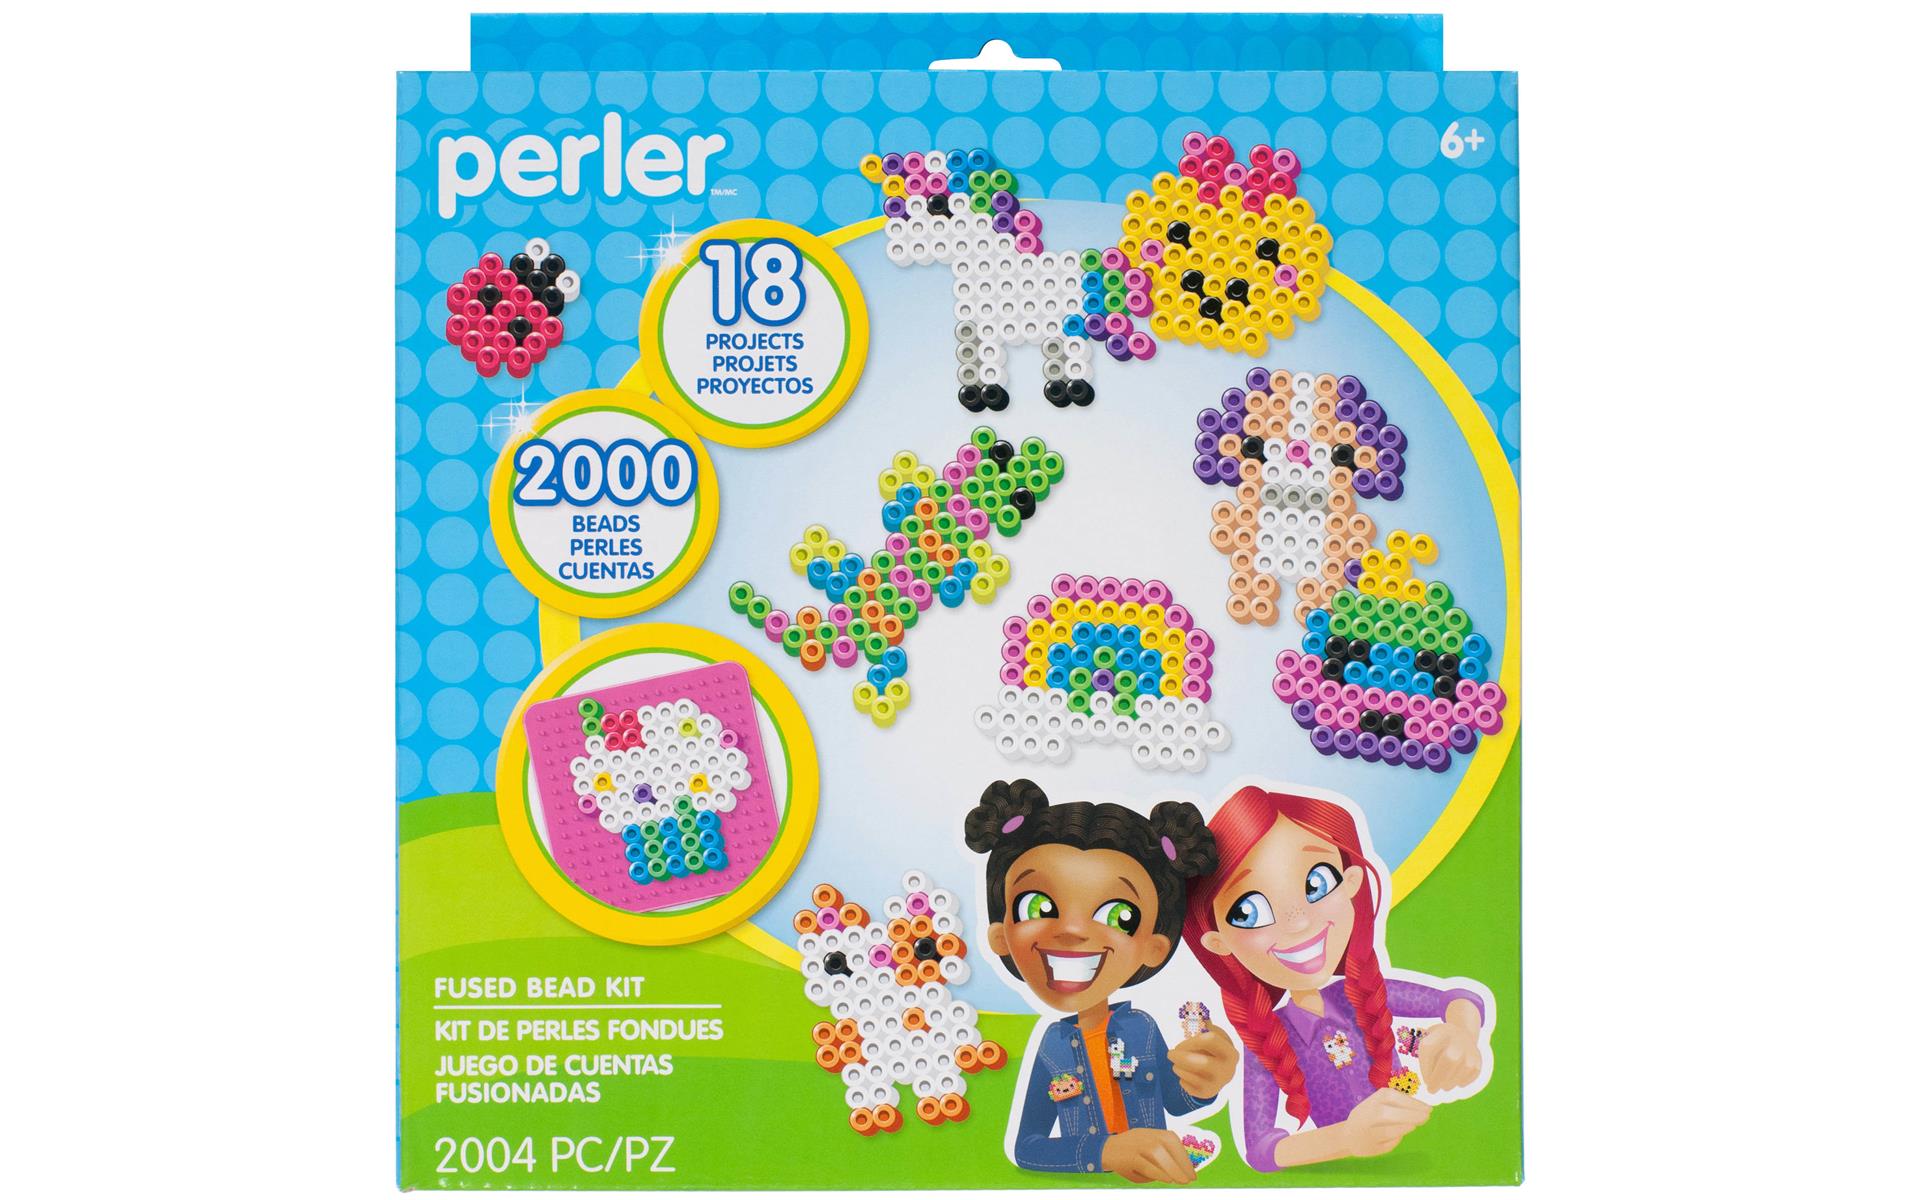 Perler Fused Bead Kit Box Small Fun With Beads | eBay